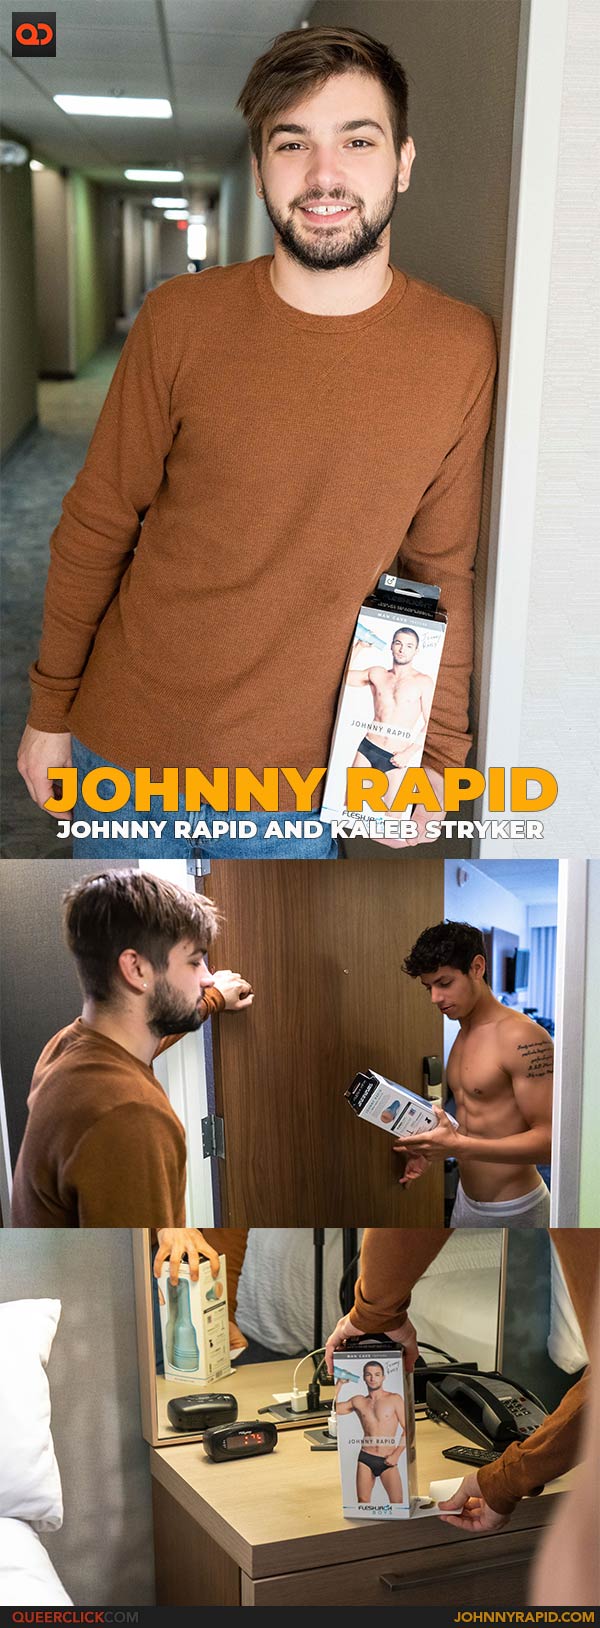 JohnnyRapid: Johnny Rapid and Kaleb Stryker - FLASH SALE